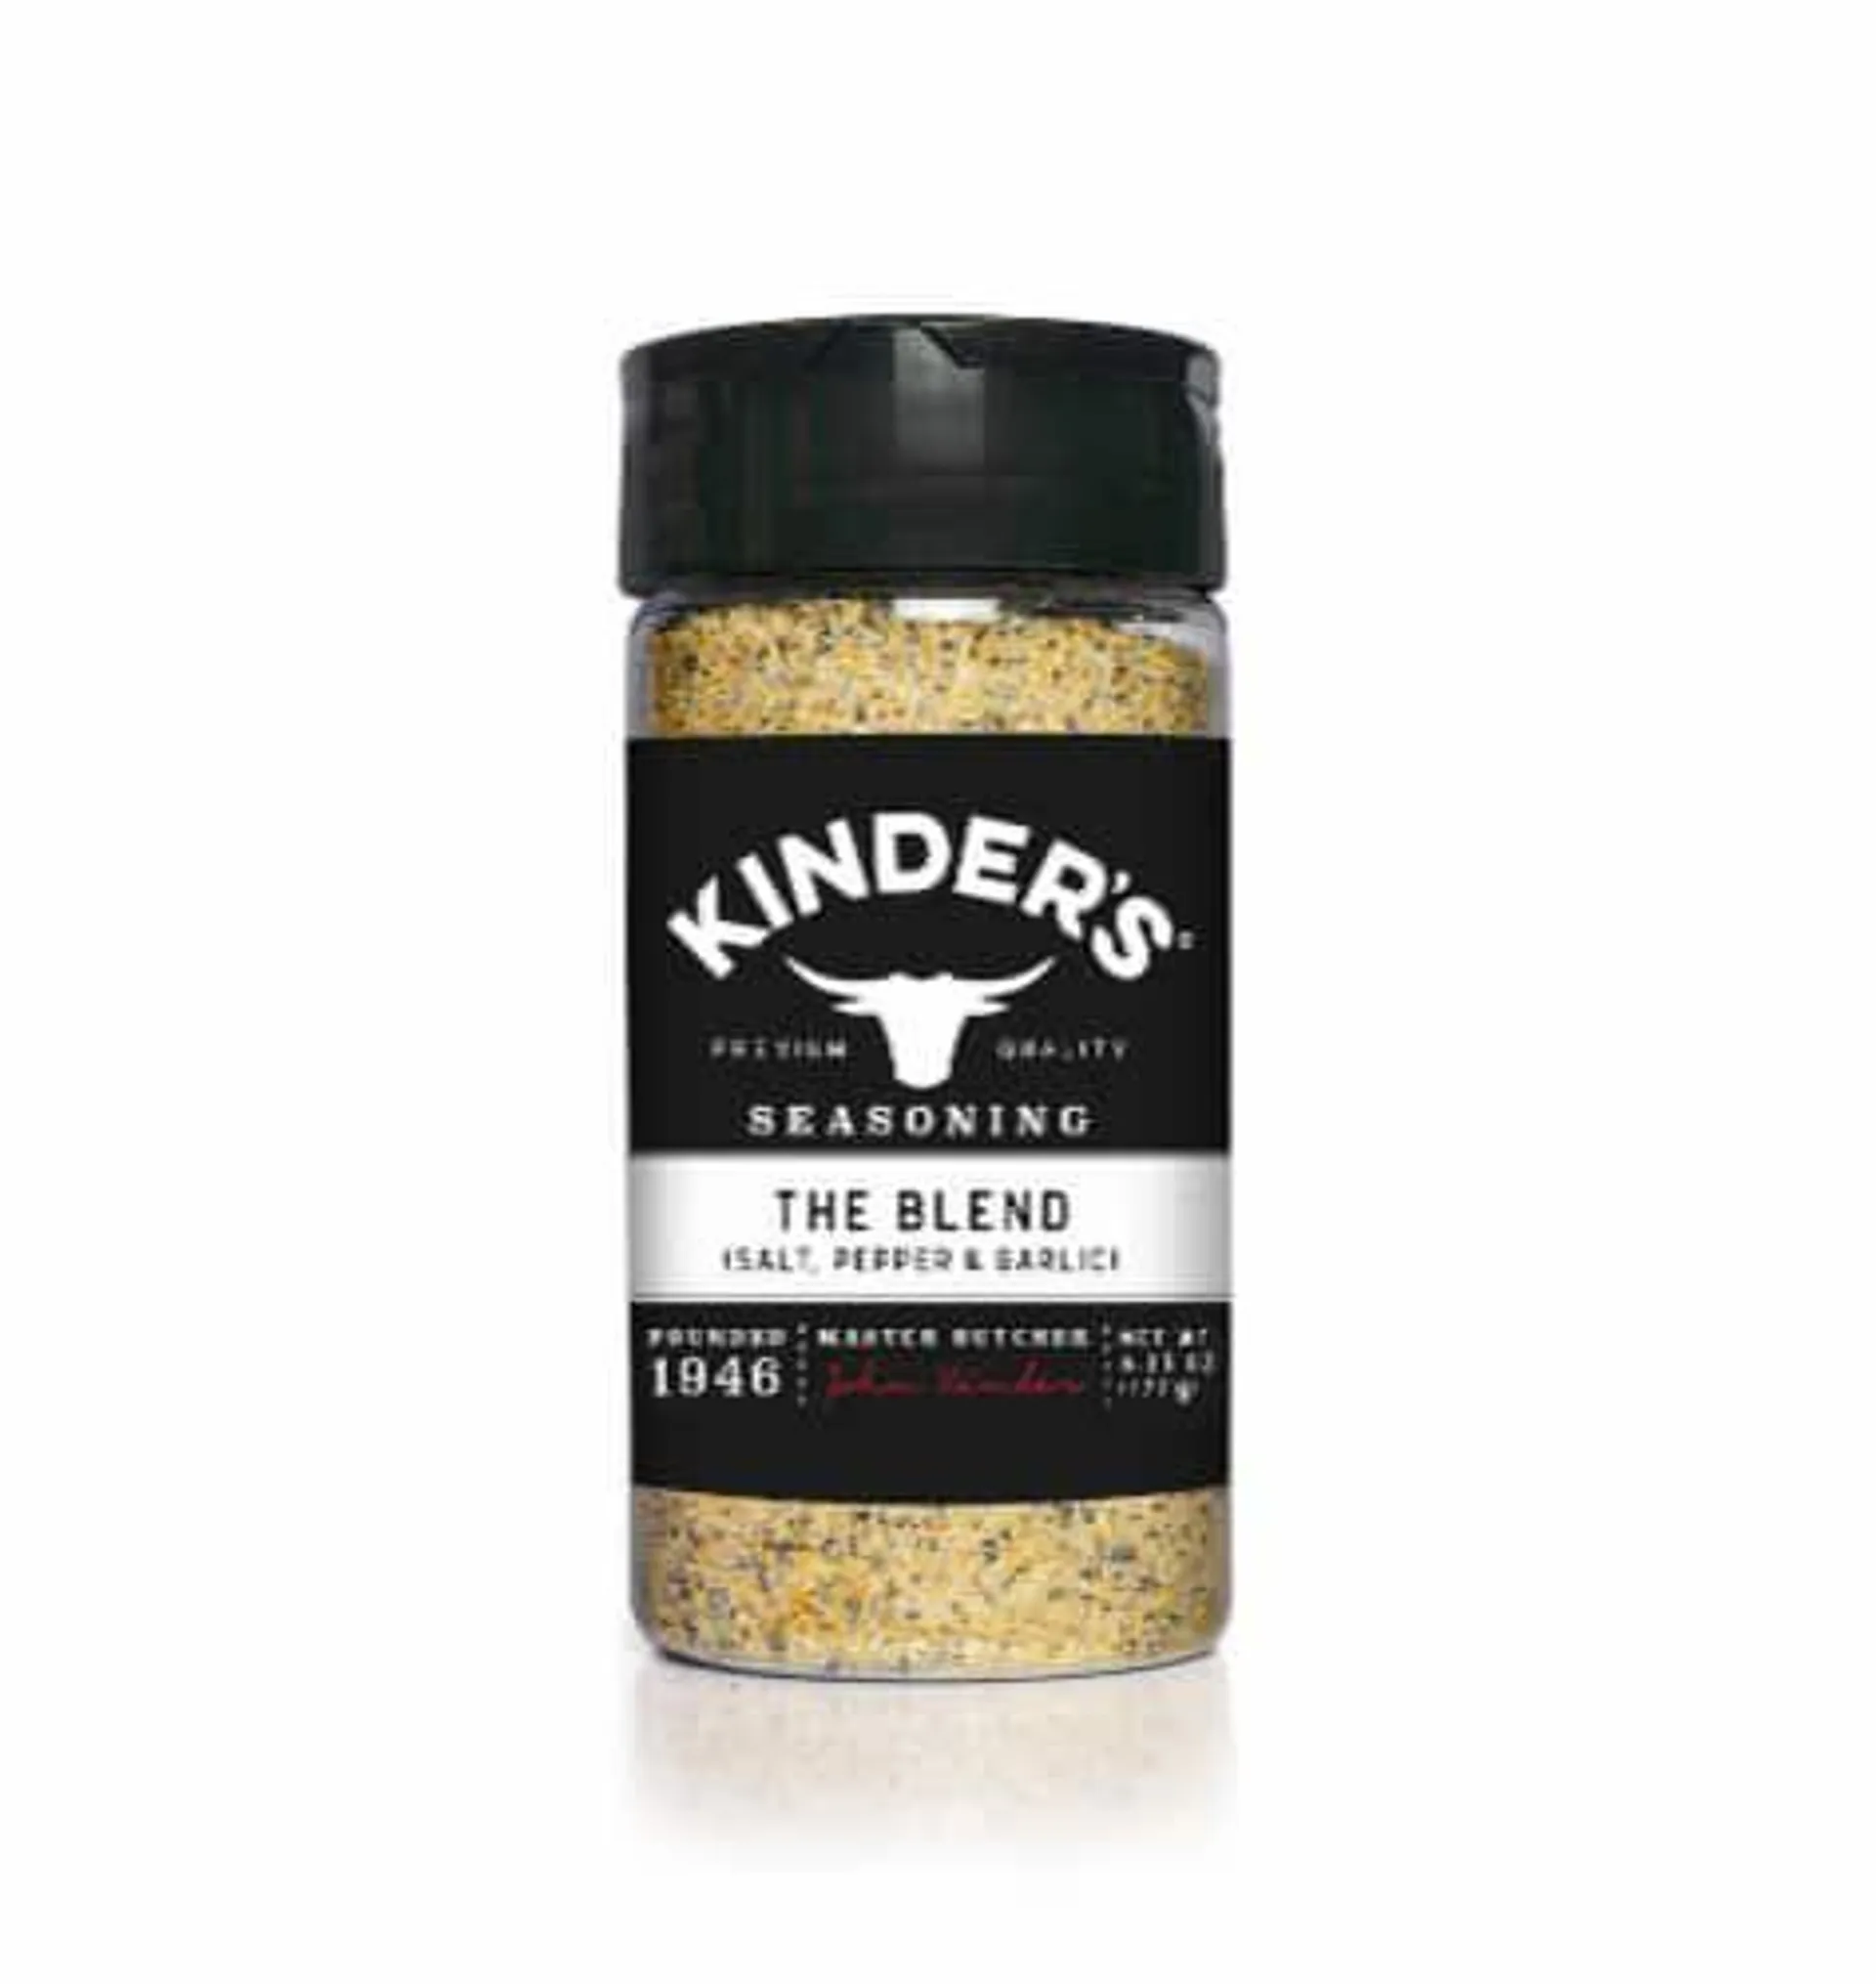 Kinder's® The Blend Seasoning